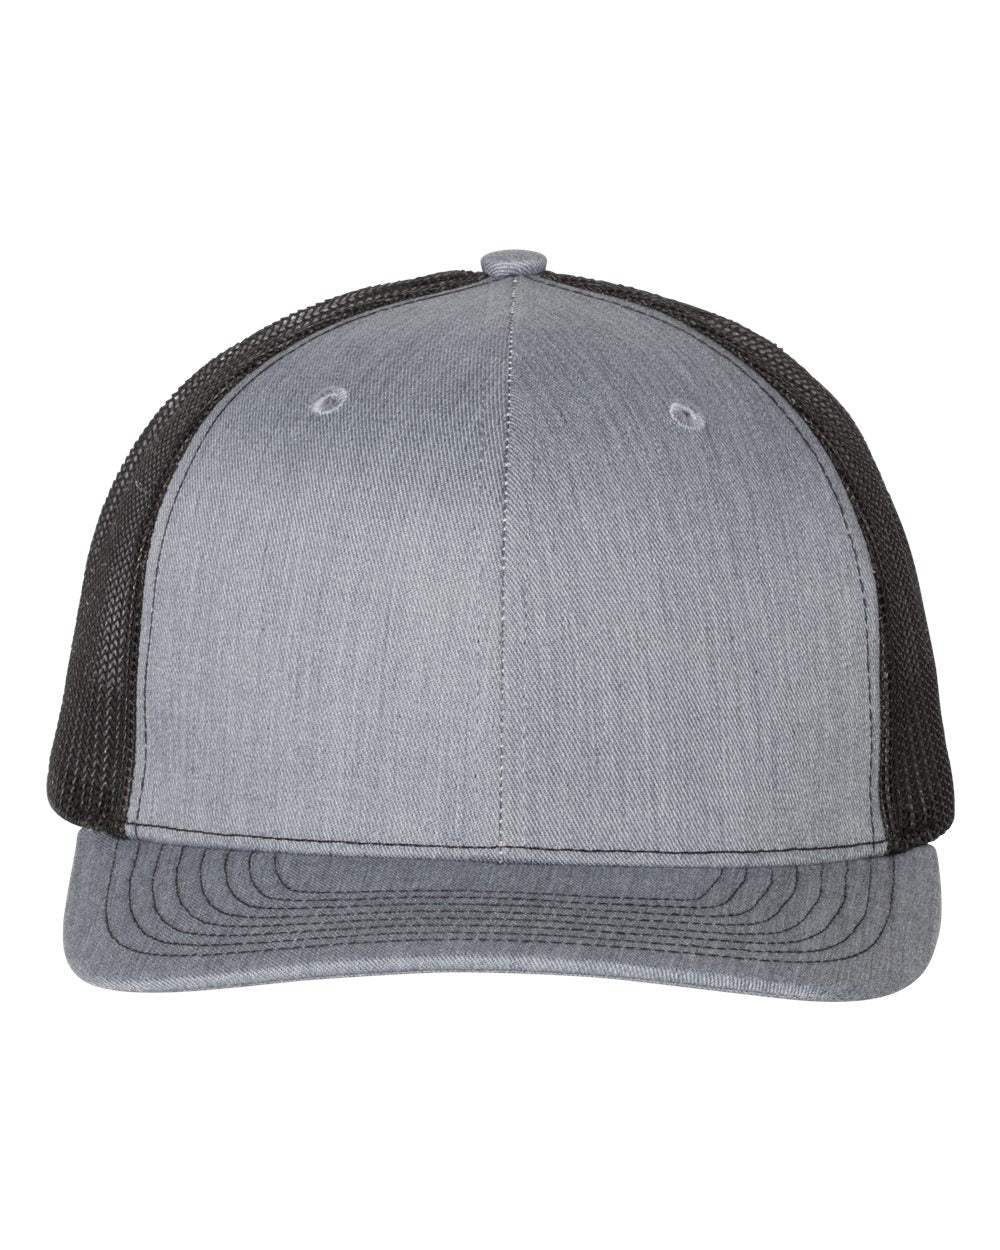 Classic Snap-Back Hats (Richardson 112) - TM Impressions